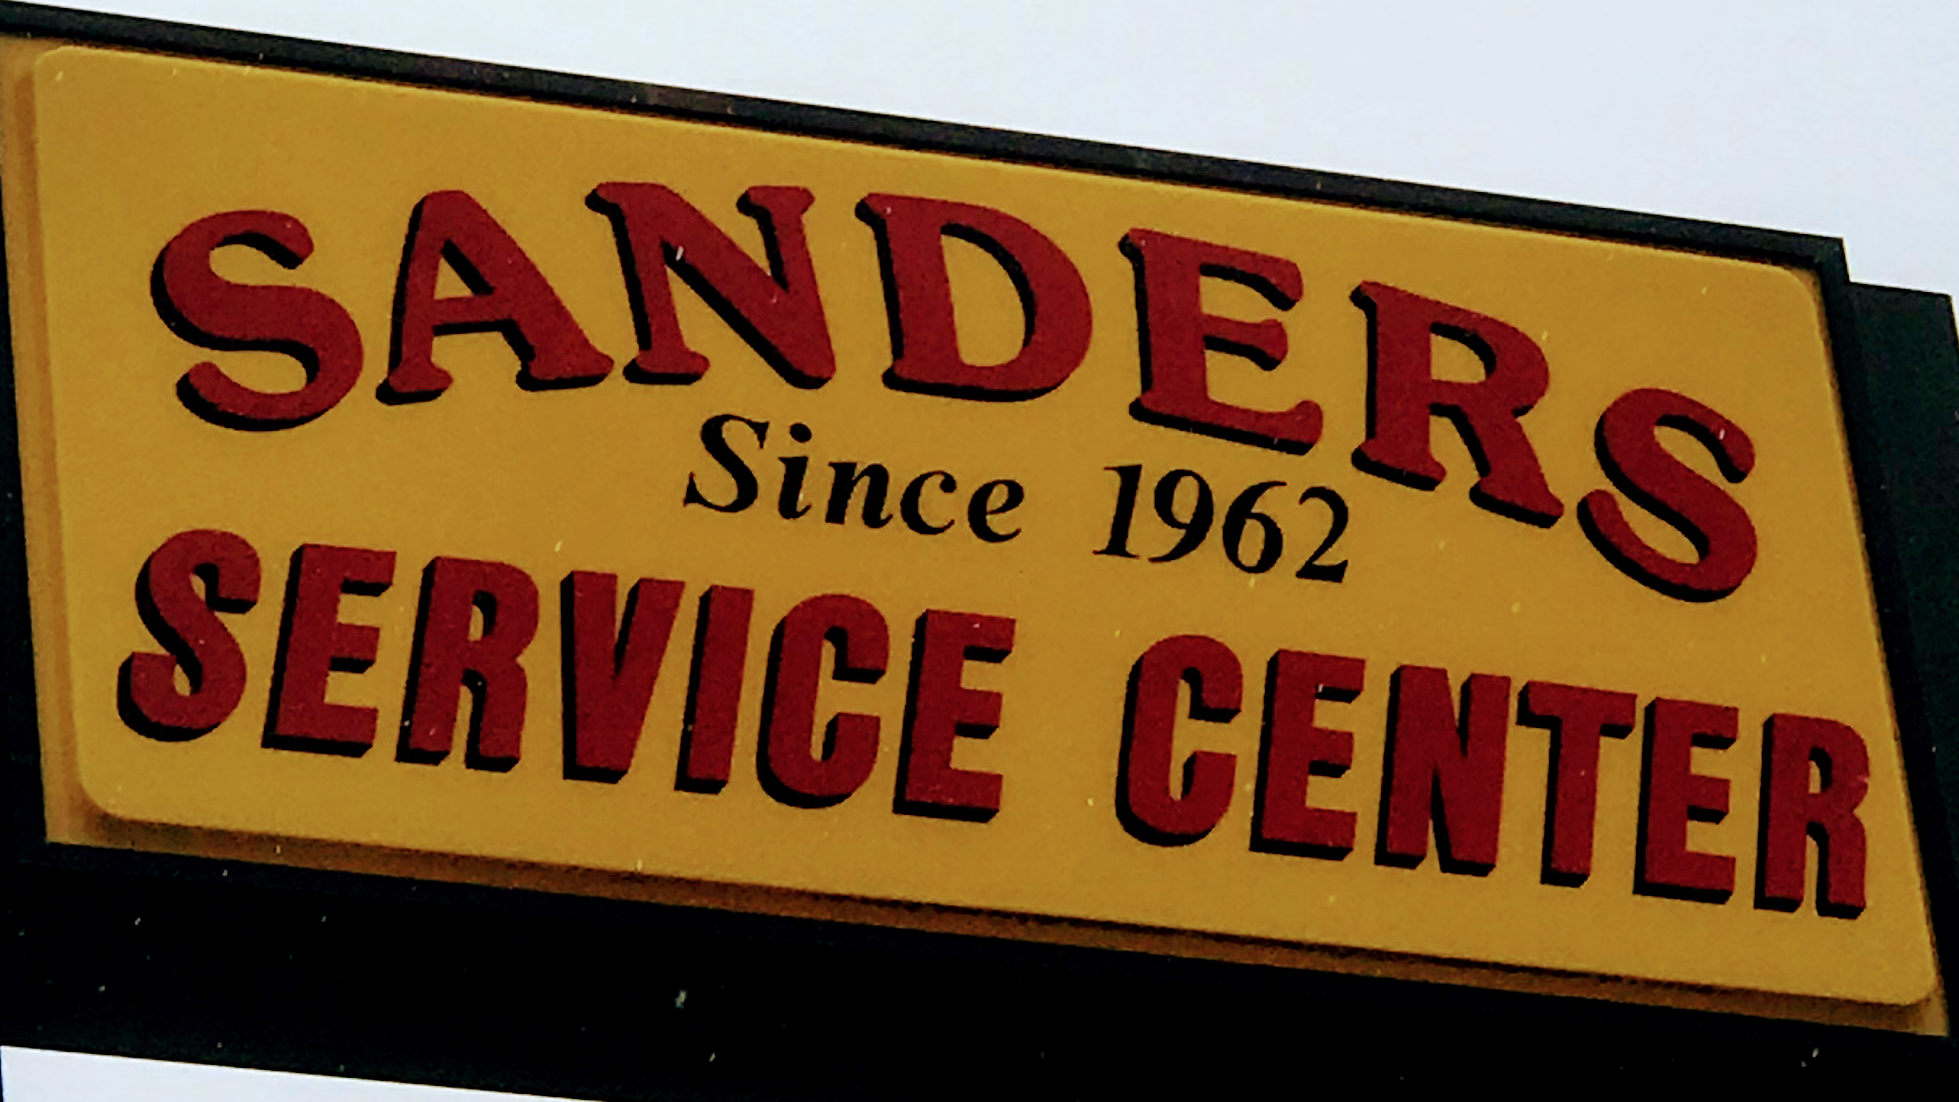 SANDERS TIRE—SANDERS SERVICE CENTER